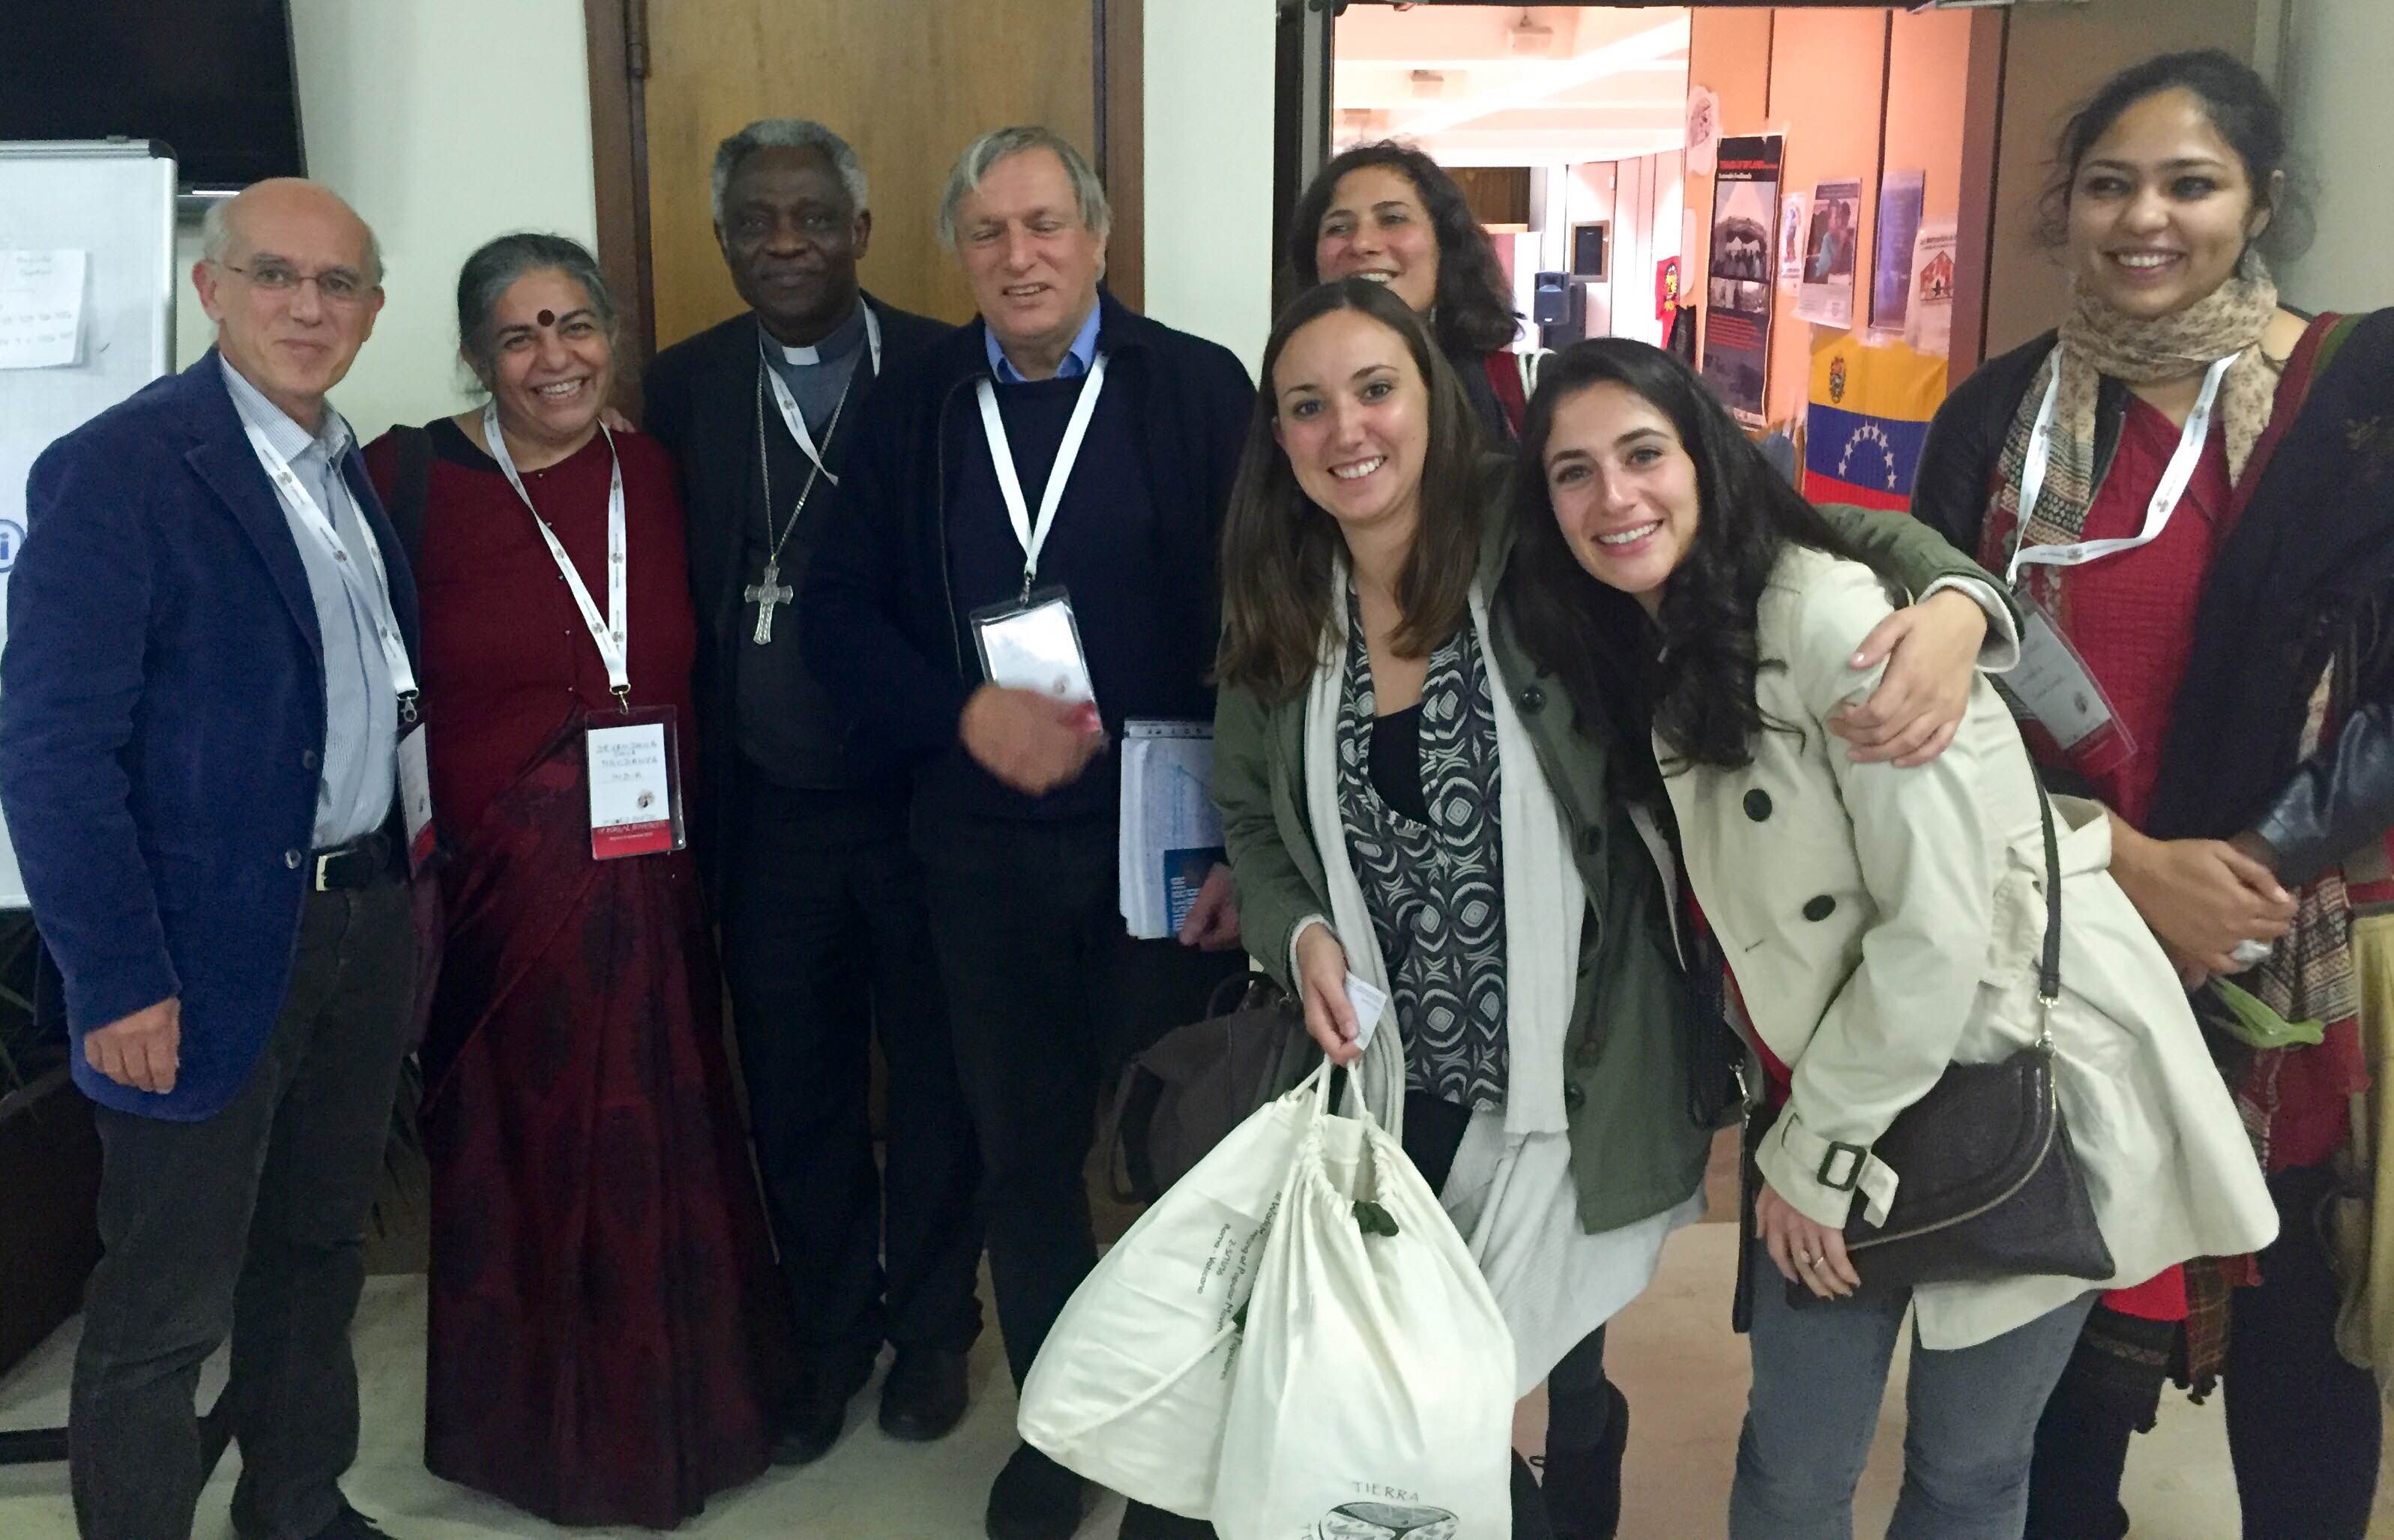 Dr Vandana Shiva and Ruchi Shroff of Navdanya, with Don Luigi Ciotti and Cardinal Turkson